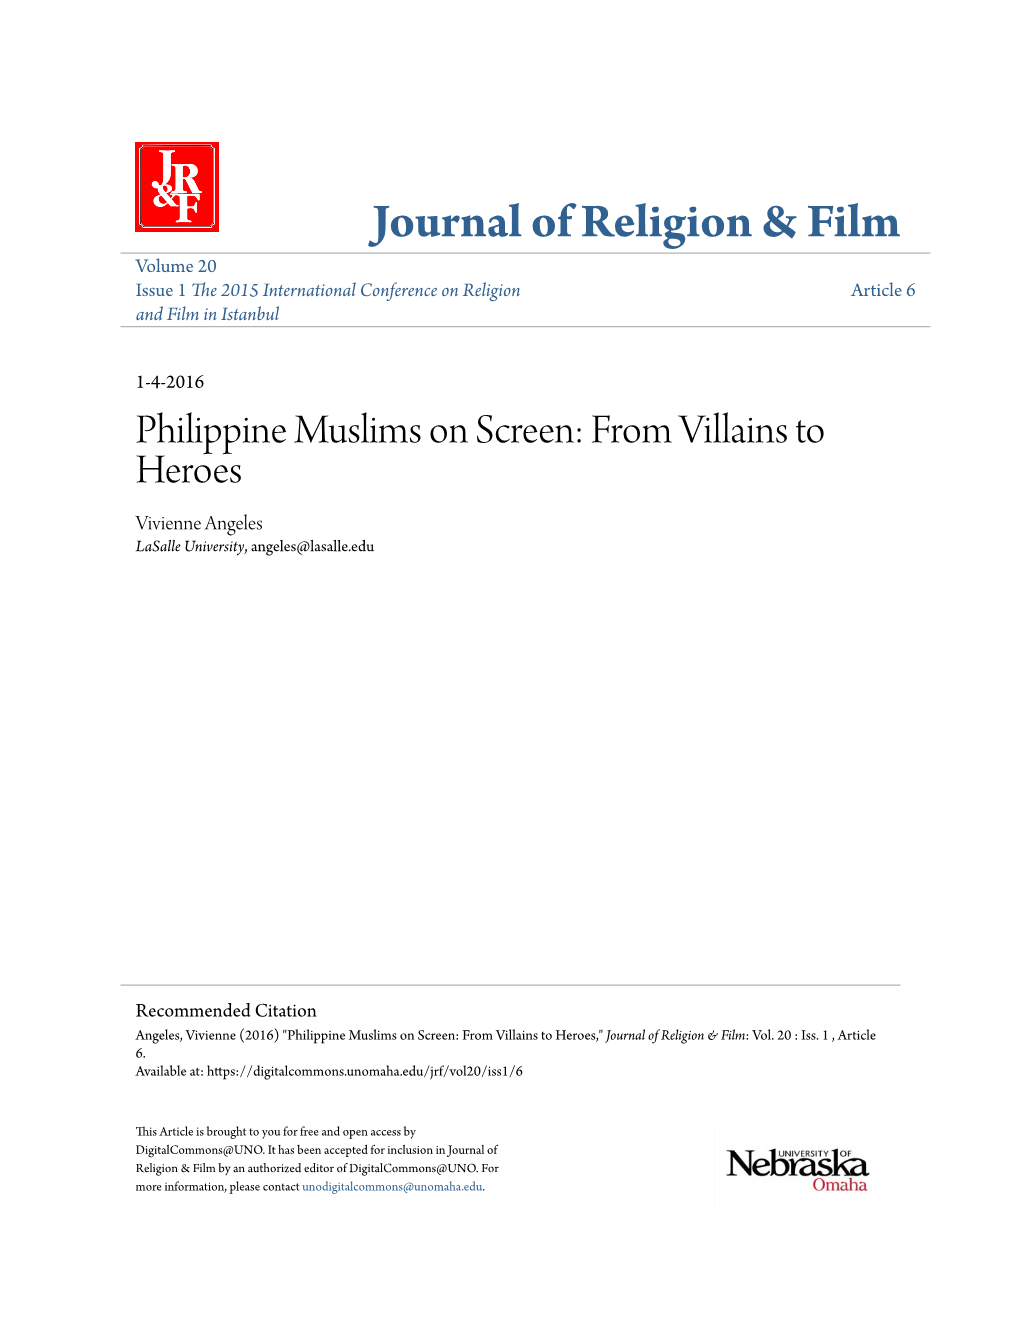 Philippine Muslims on Screen: from Villains to Heroes Vivienne Angeles Lasalle University, Angeles@Lasalle.Edu